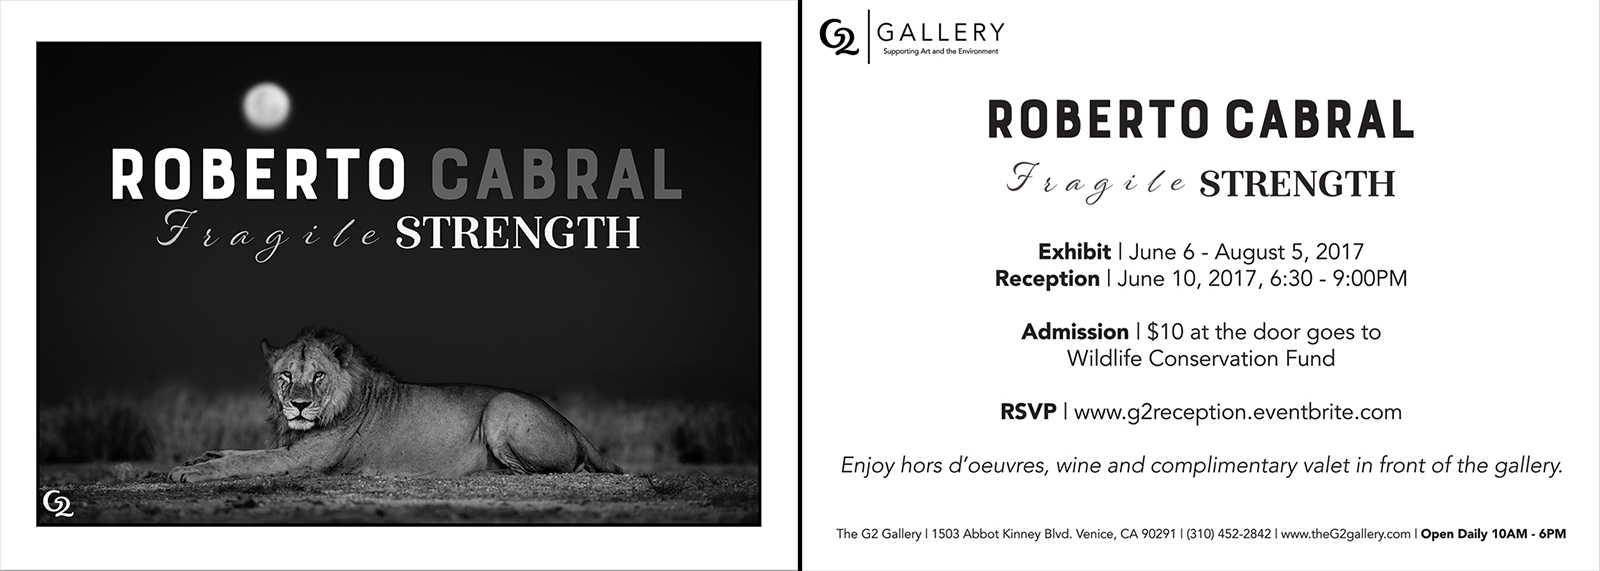 Roberto Cabral Photo Exhibit at The G2 Gallery